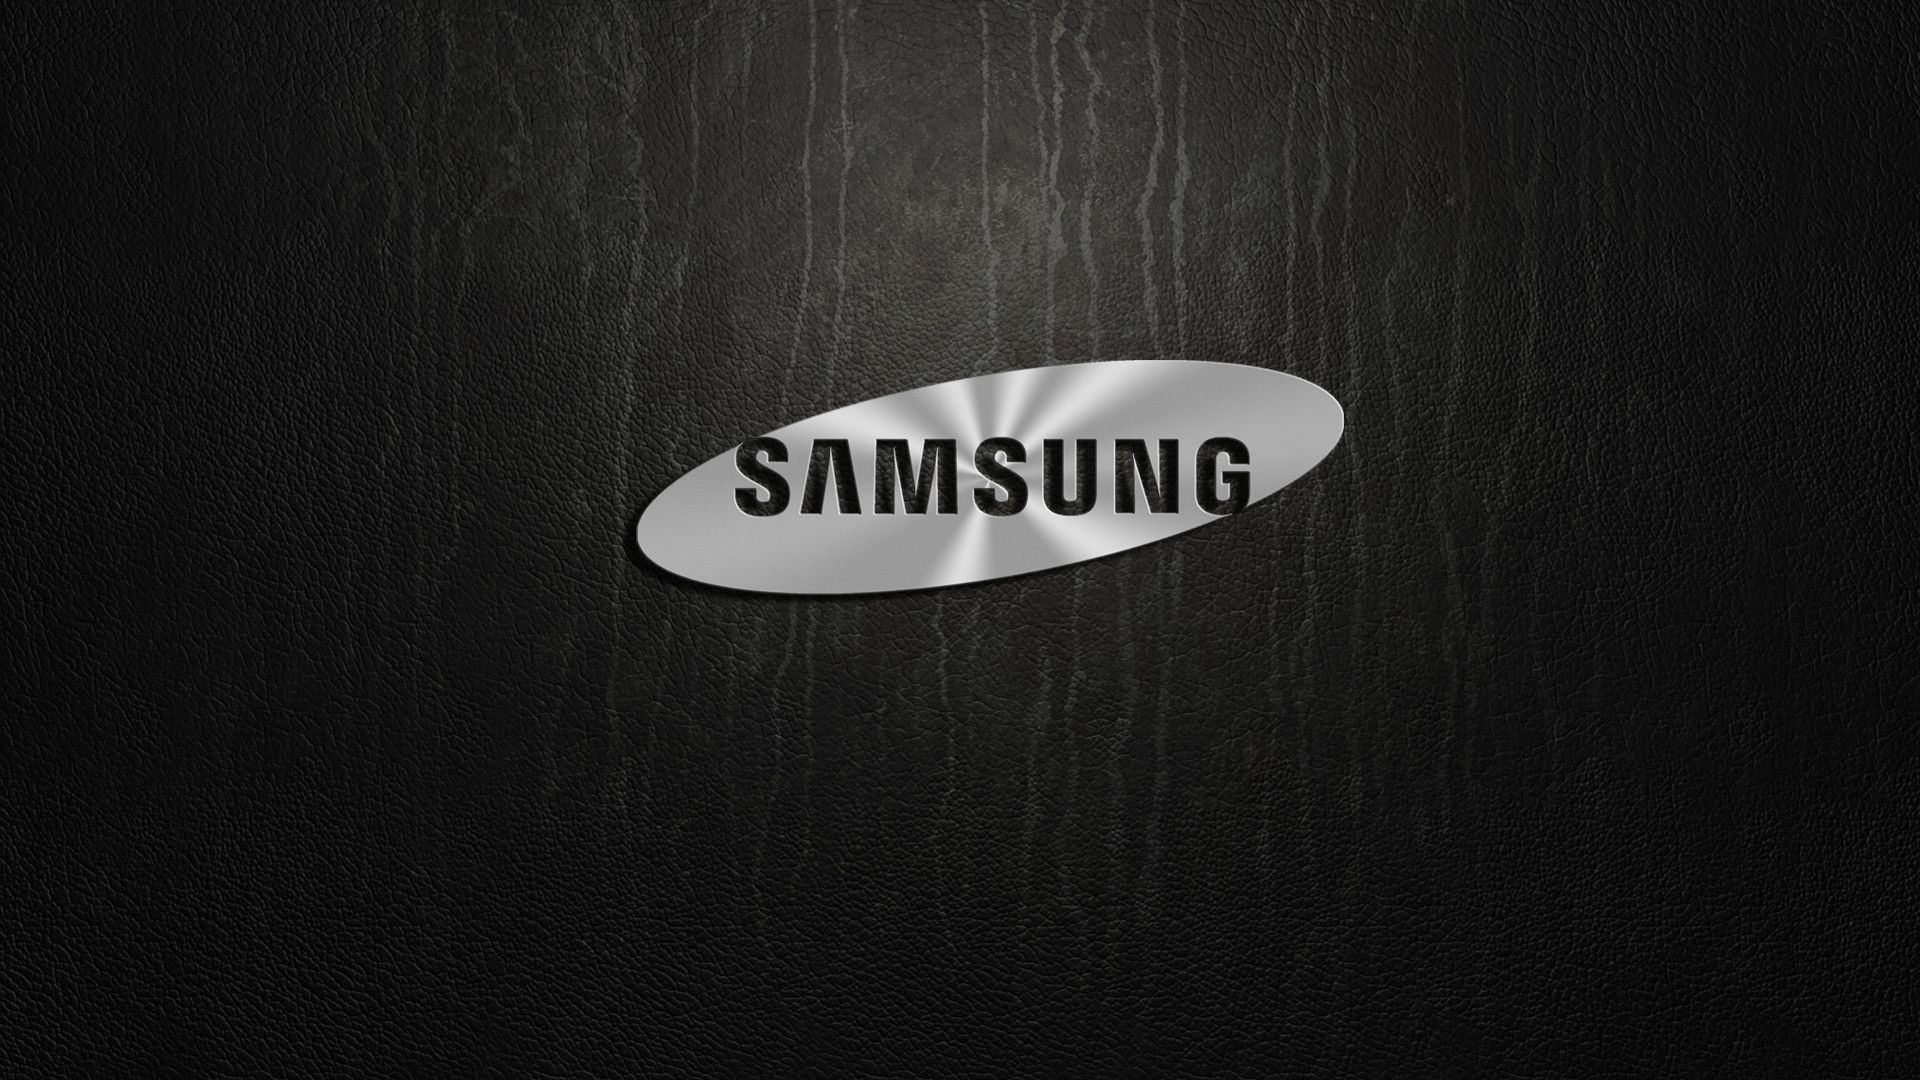 Samsung Logo Wallpapers On Wallpaperdog